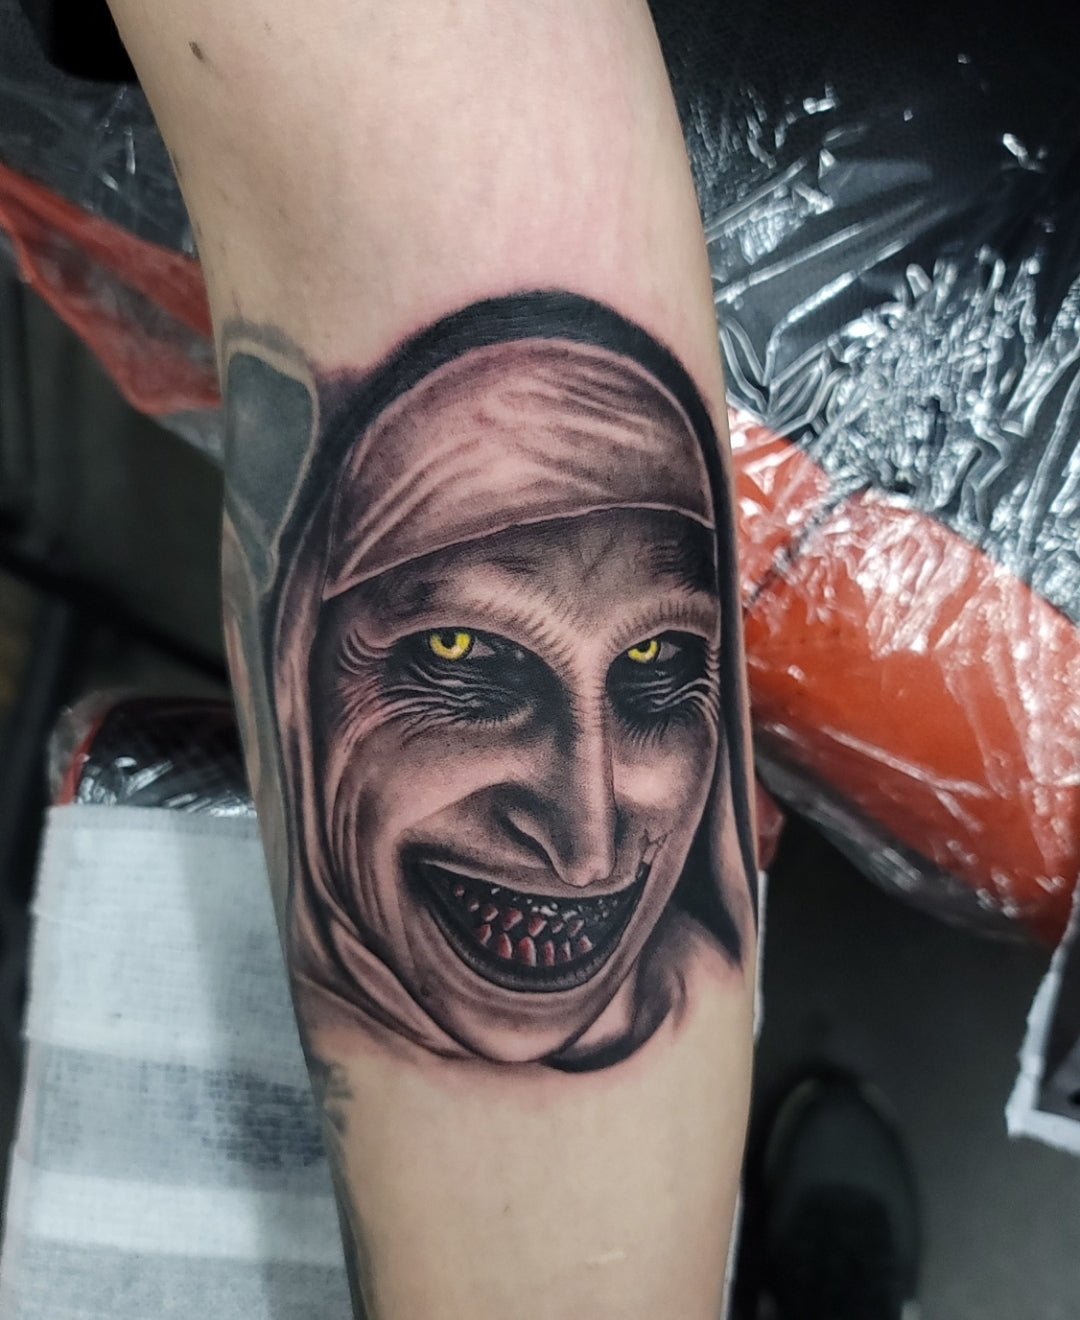 1 Horror/Movie Character Portrait Tattoo